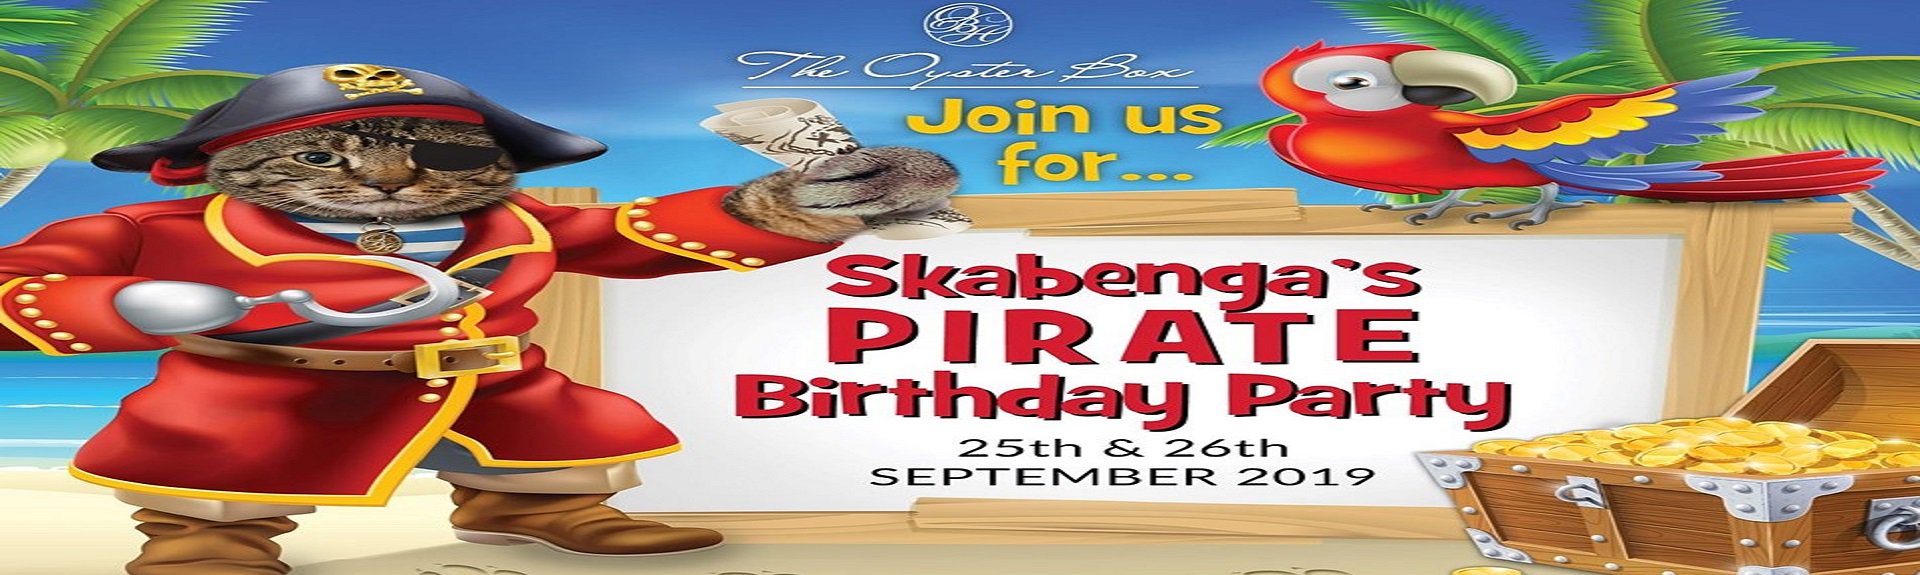 Skabenga's Pirate Birthday Party